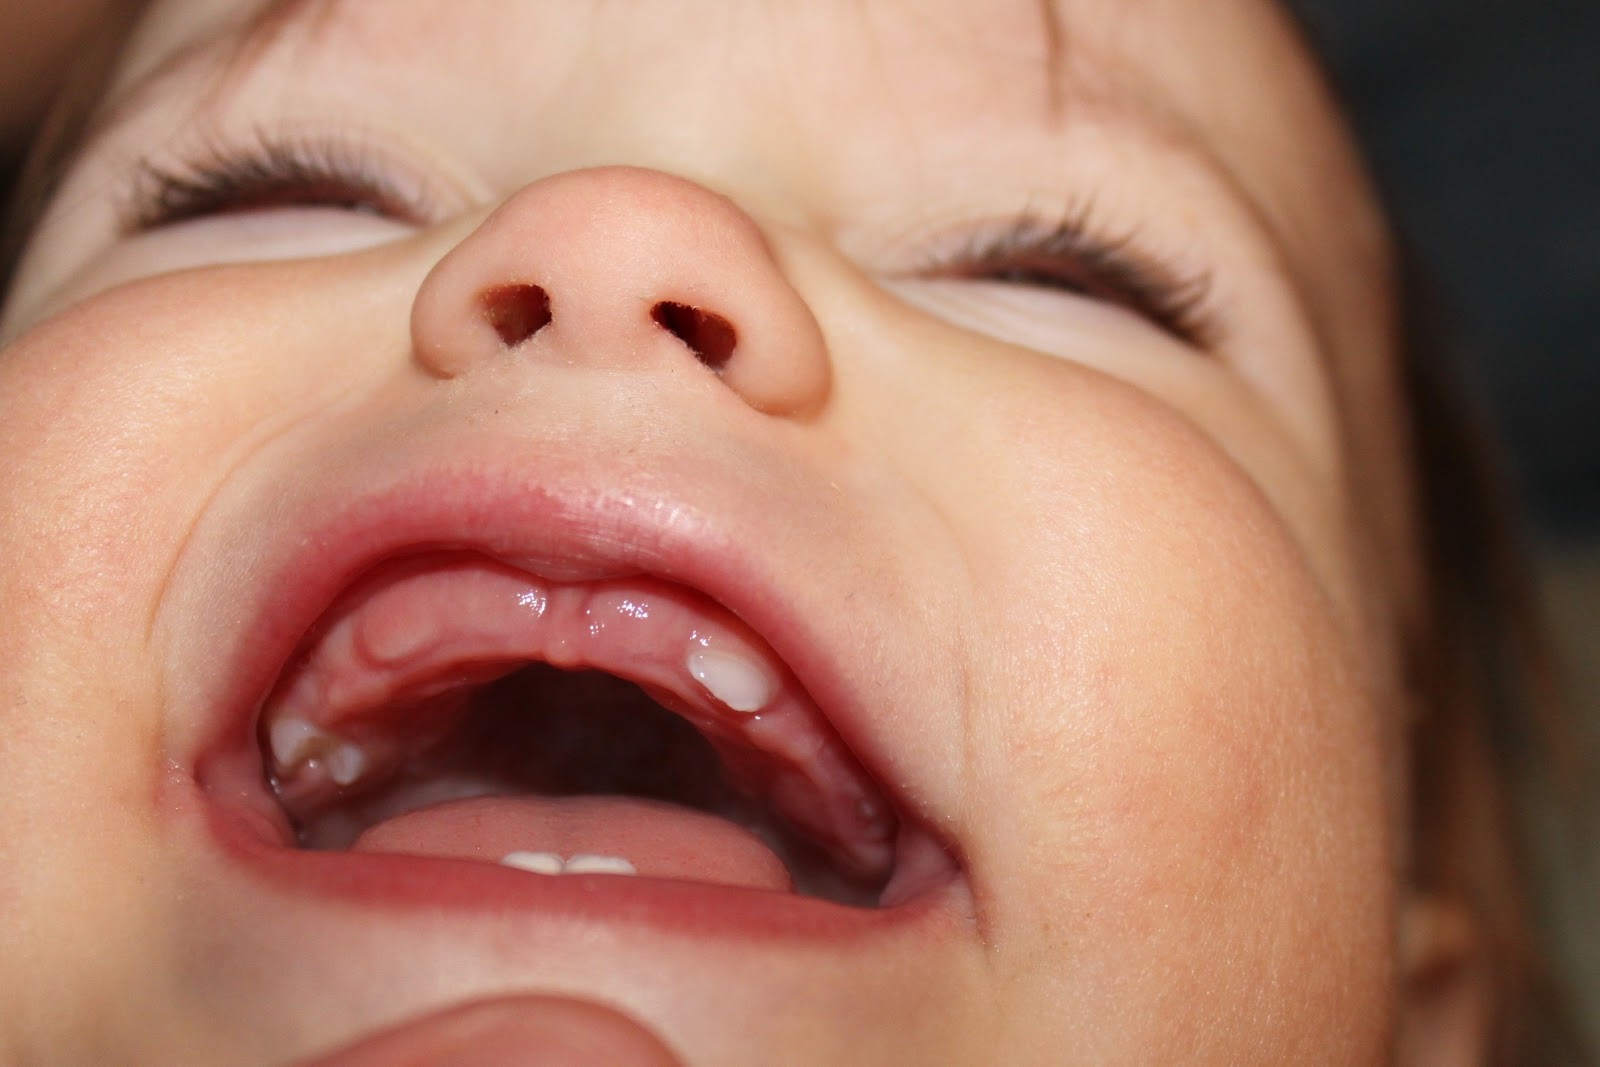 Лезут зубы у ребенка постоянно